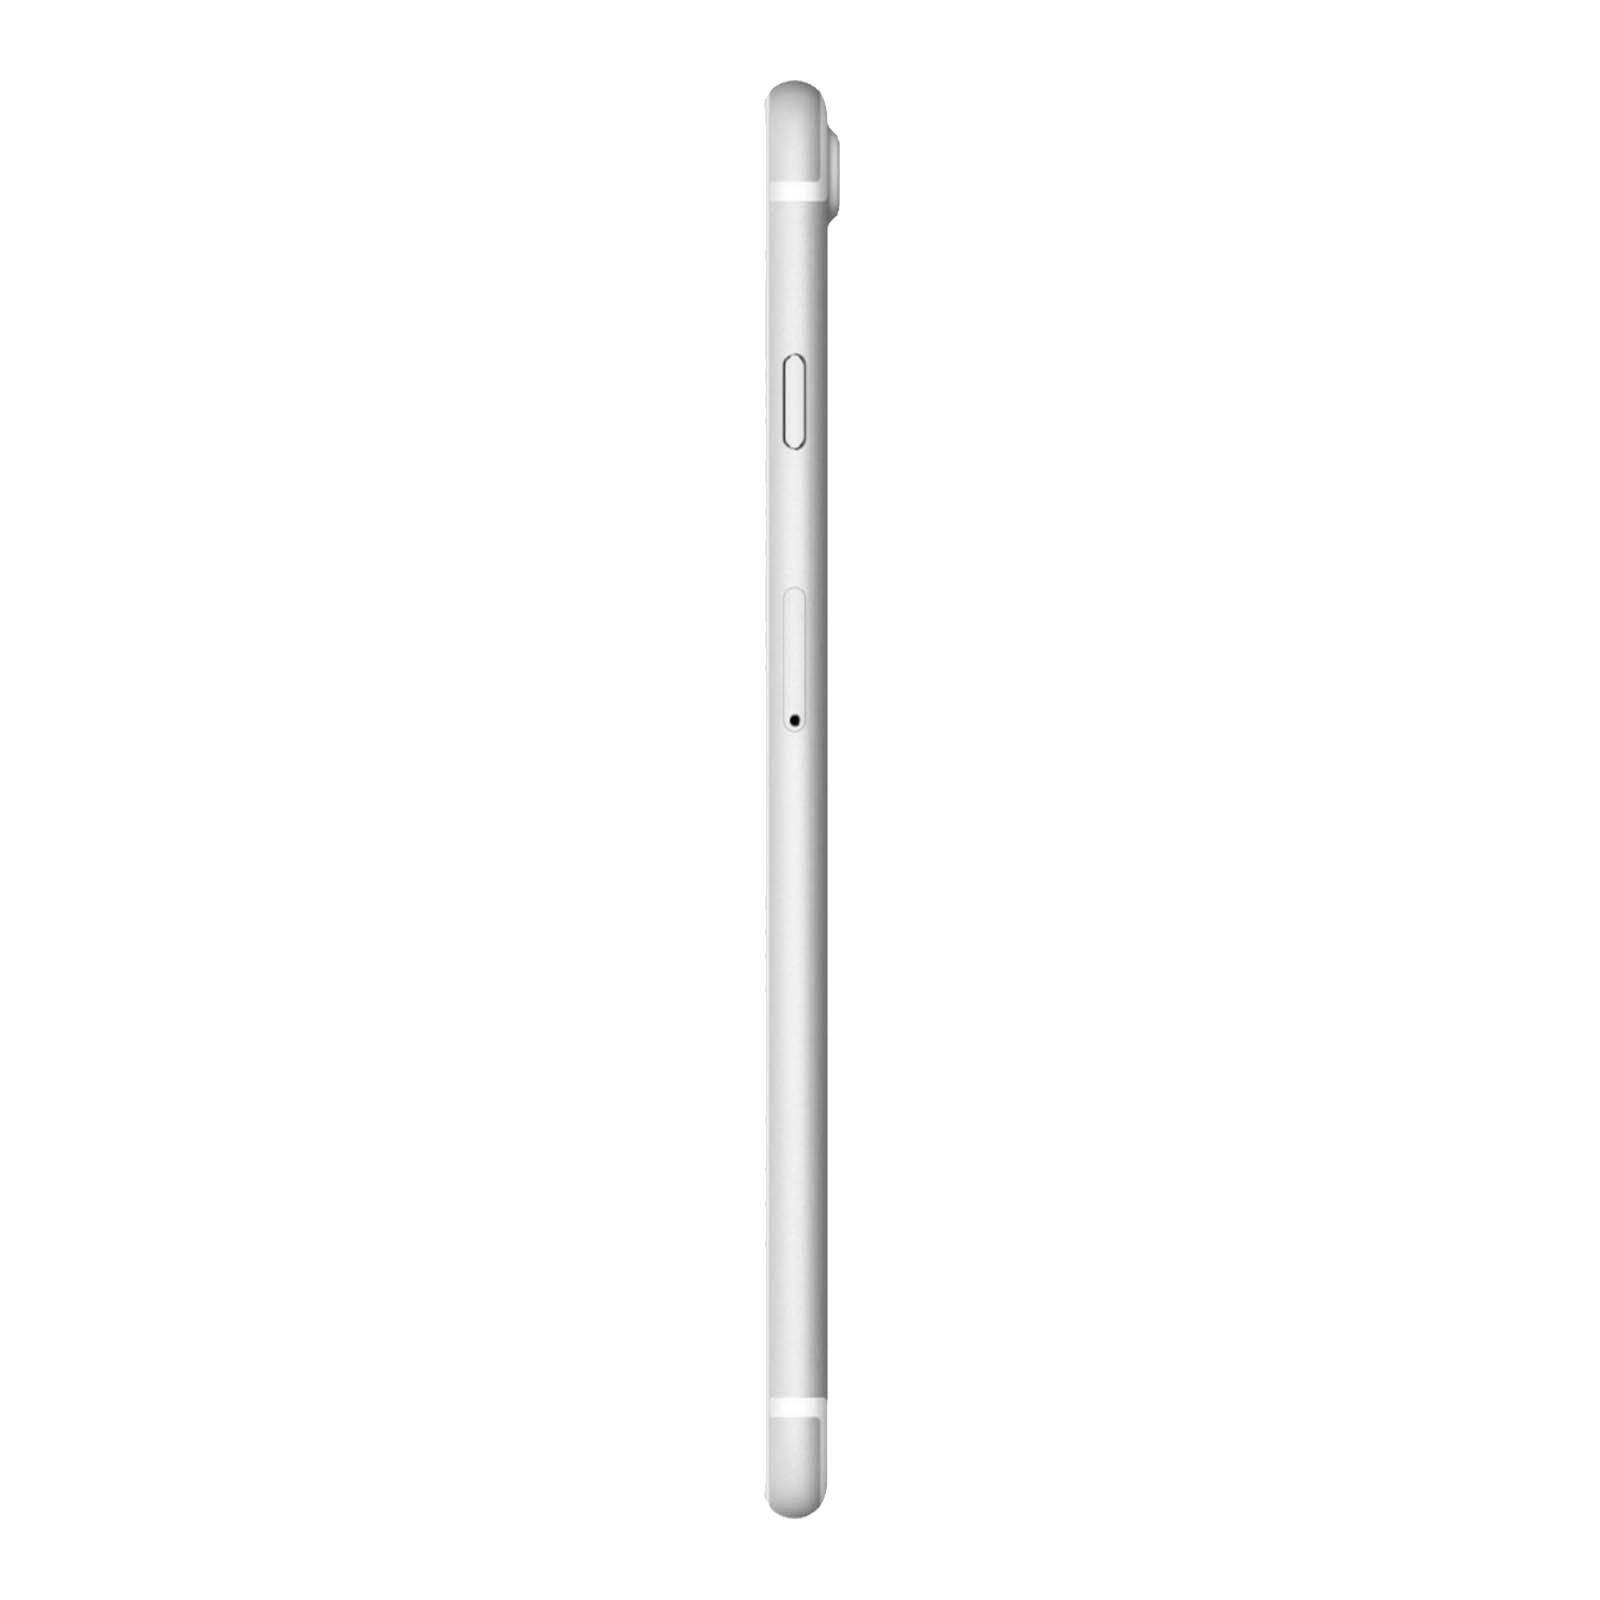 Apple iPhone 7 Plus 32GB Silver Pristine - Unlocked